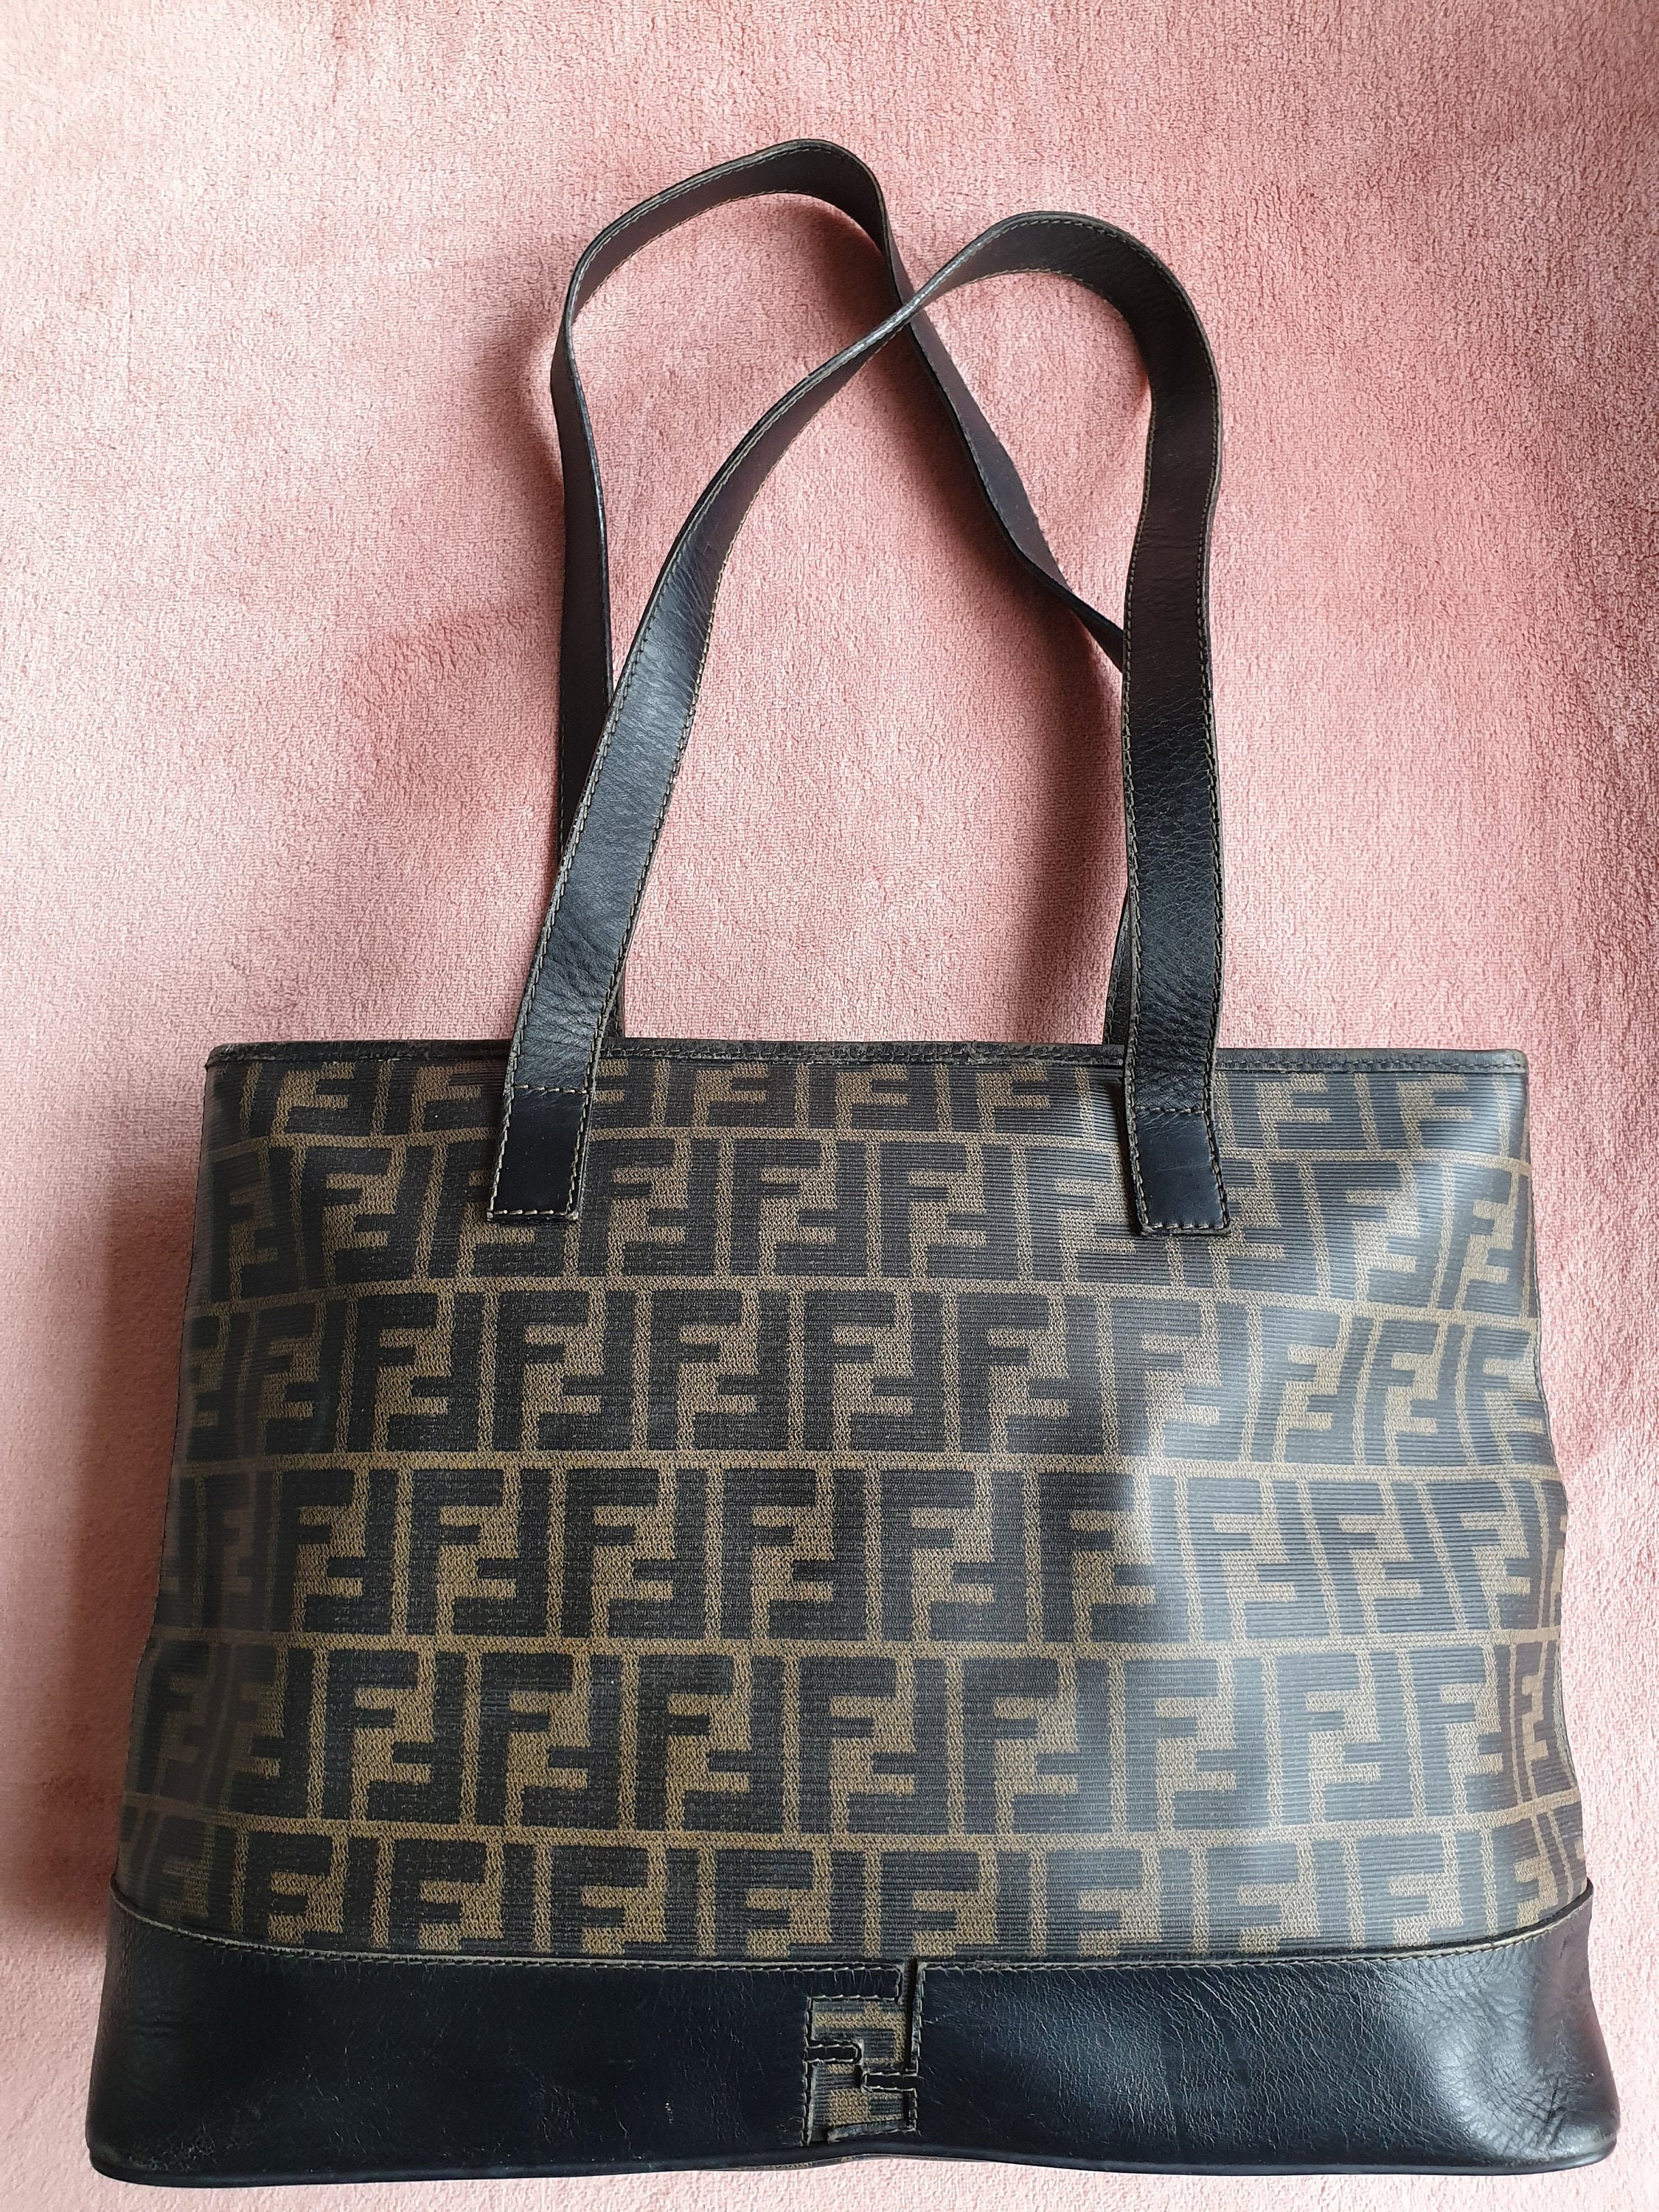 Fendi Tote Bags for Women  Authenticity Guaranteed  eBay